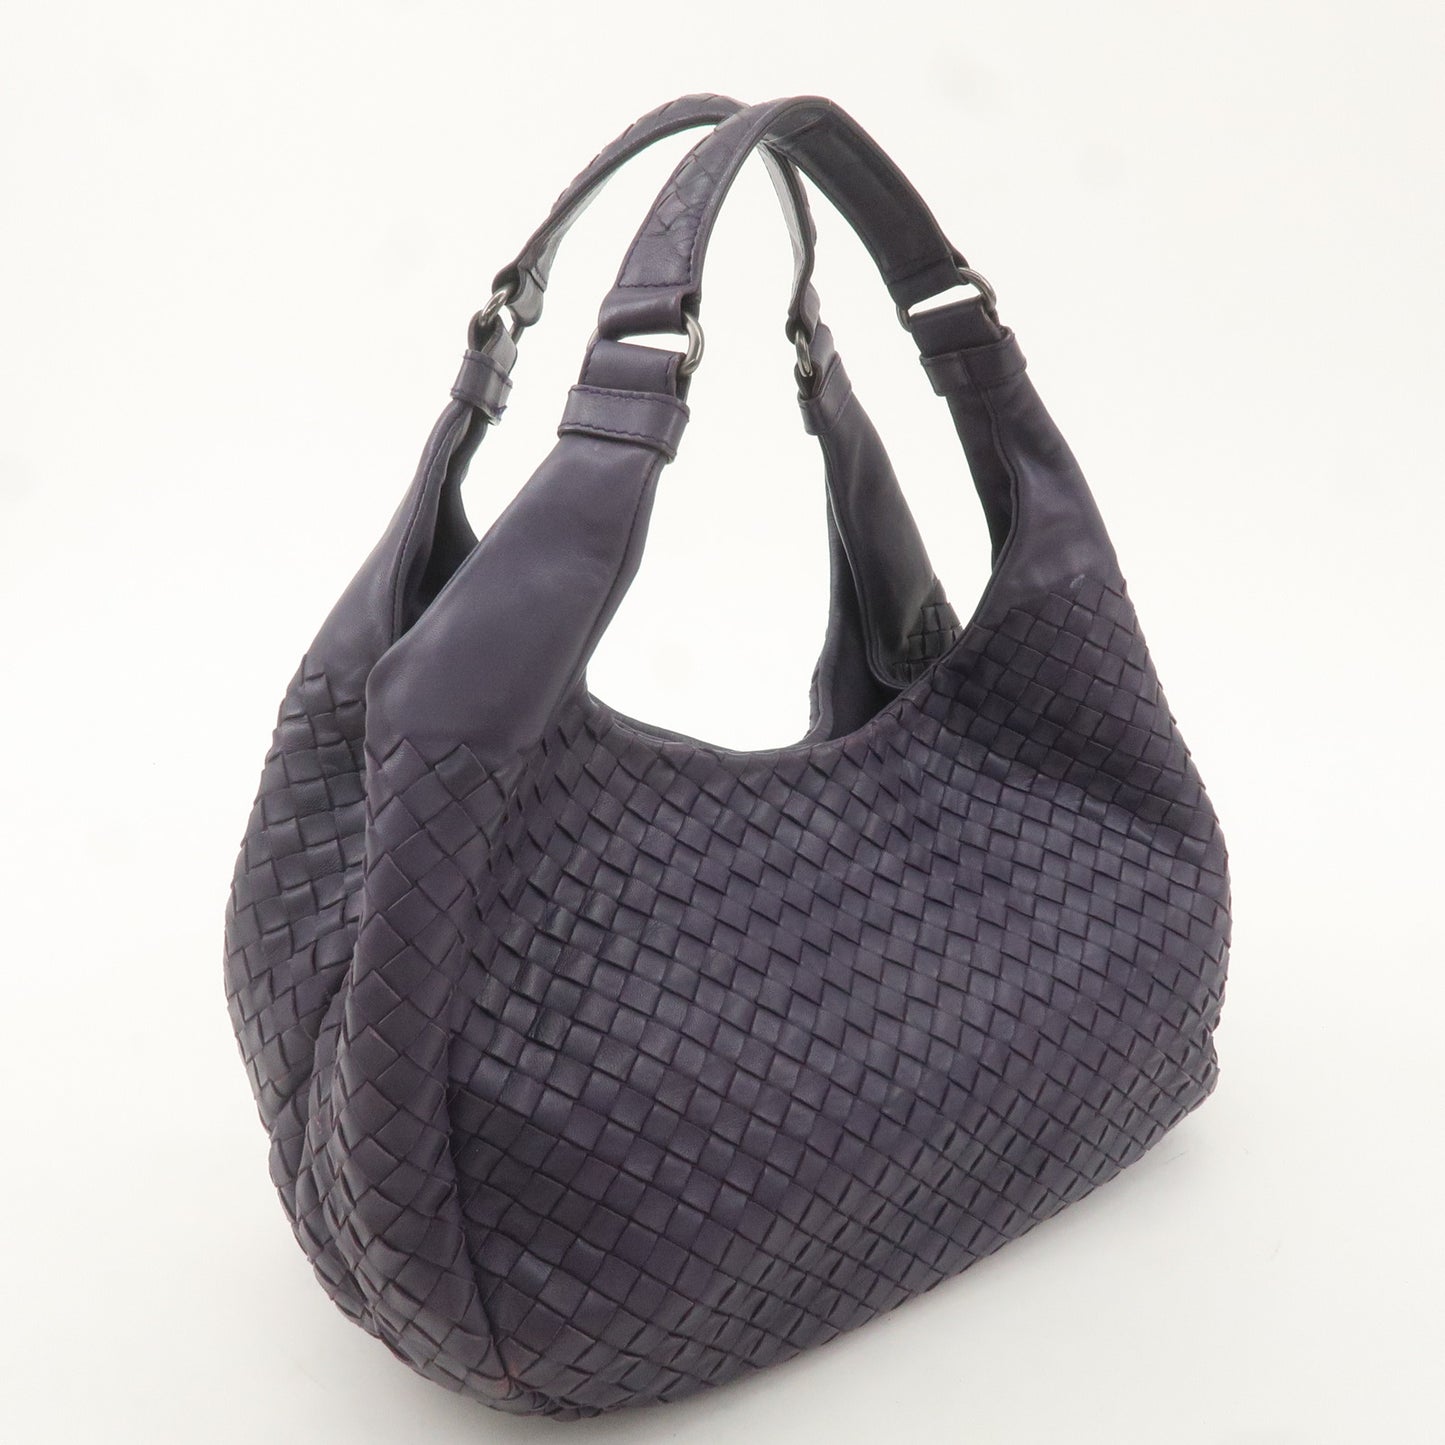 BOTTEGA VENETA Intrecciato Leather Shoulder Bag Purple 125787